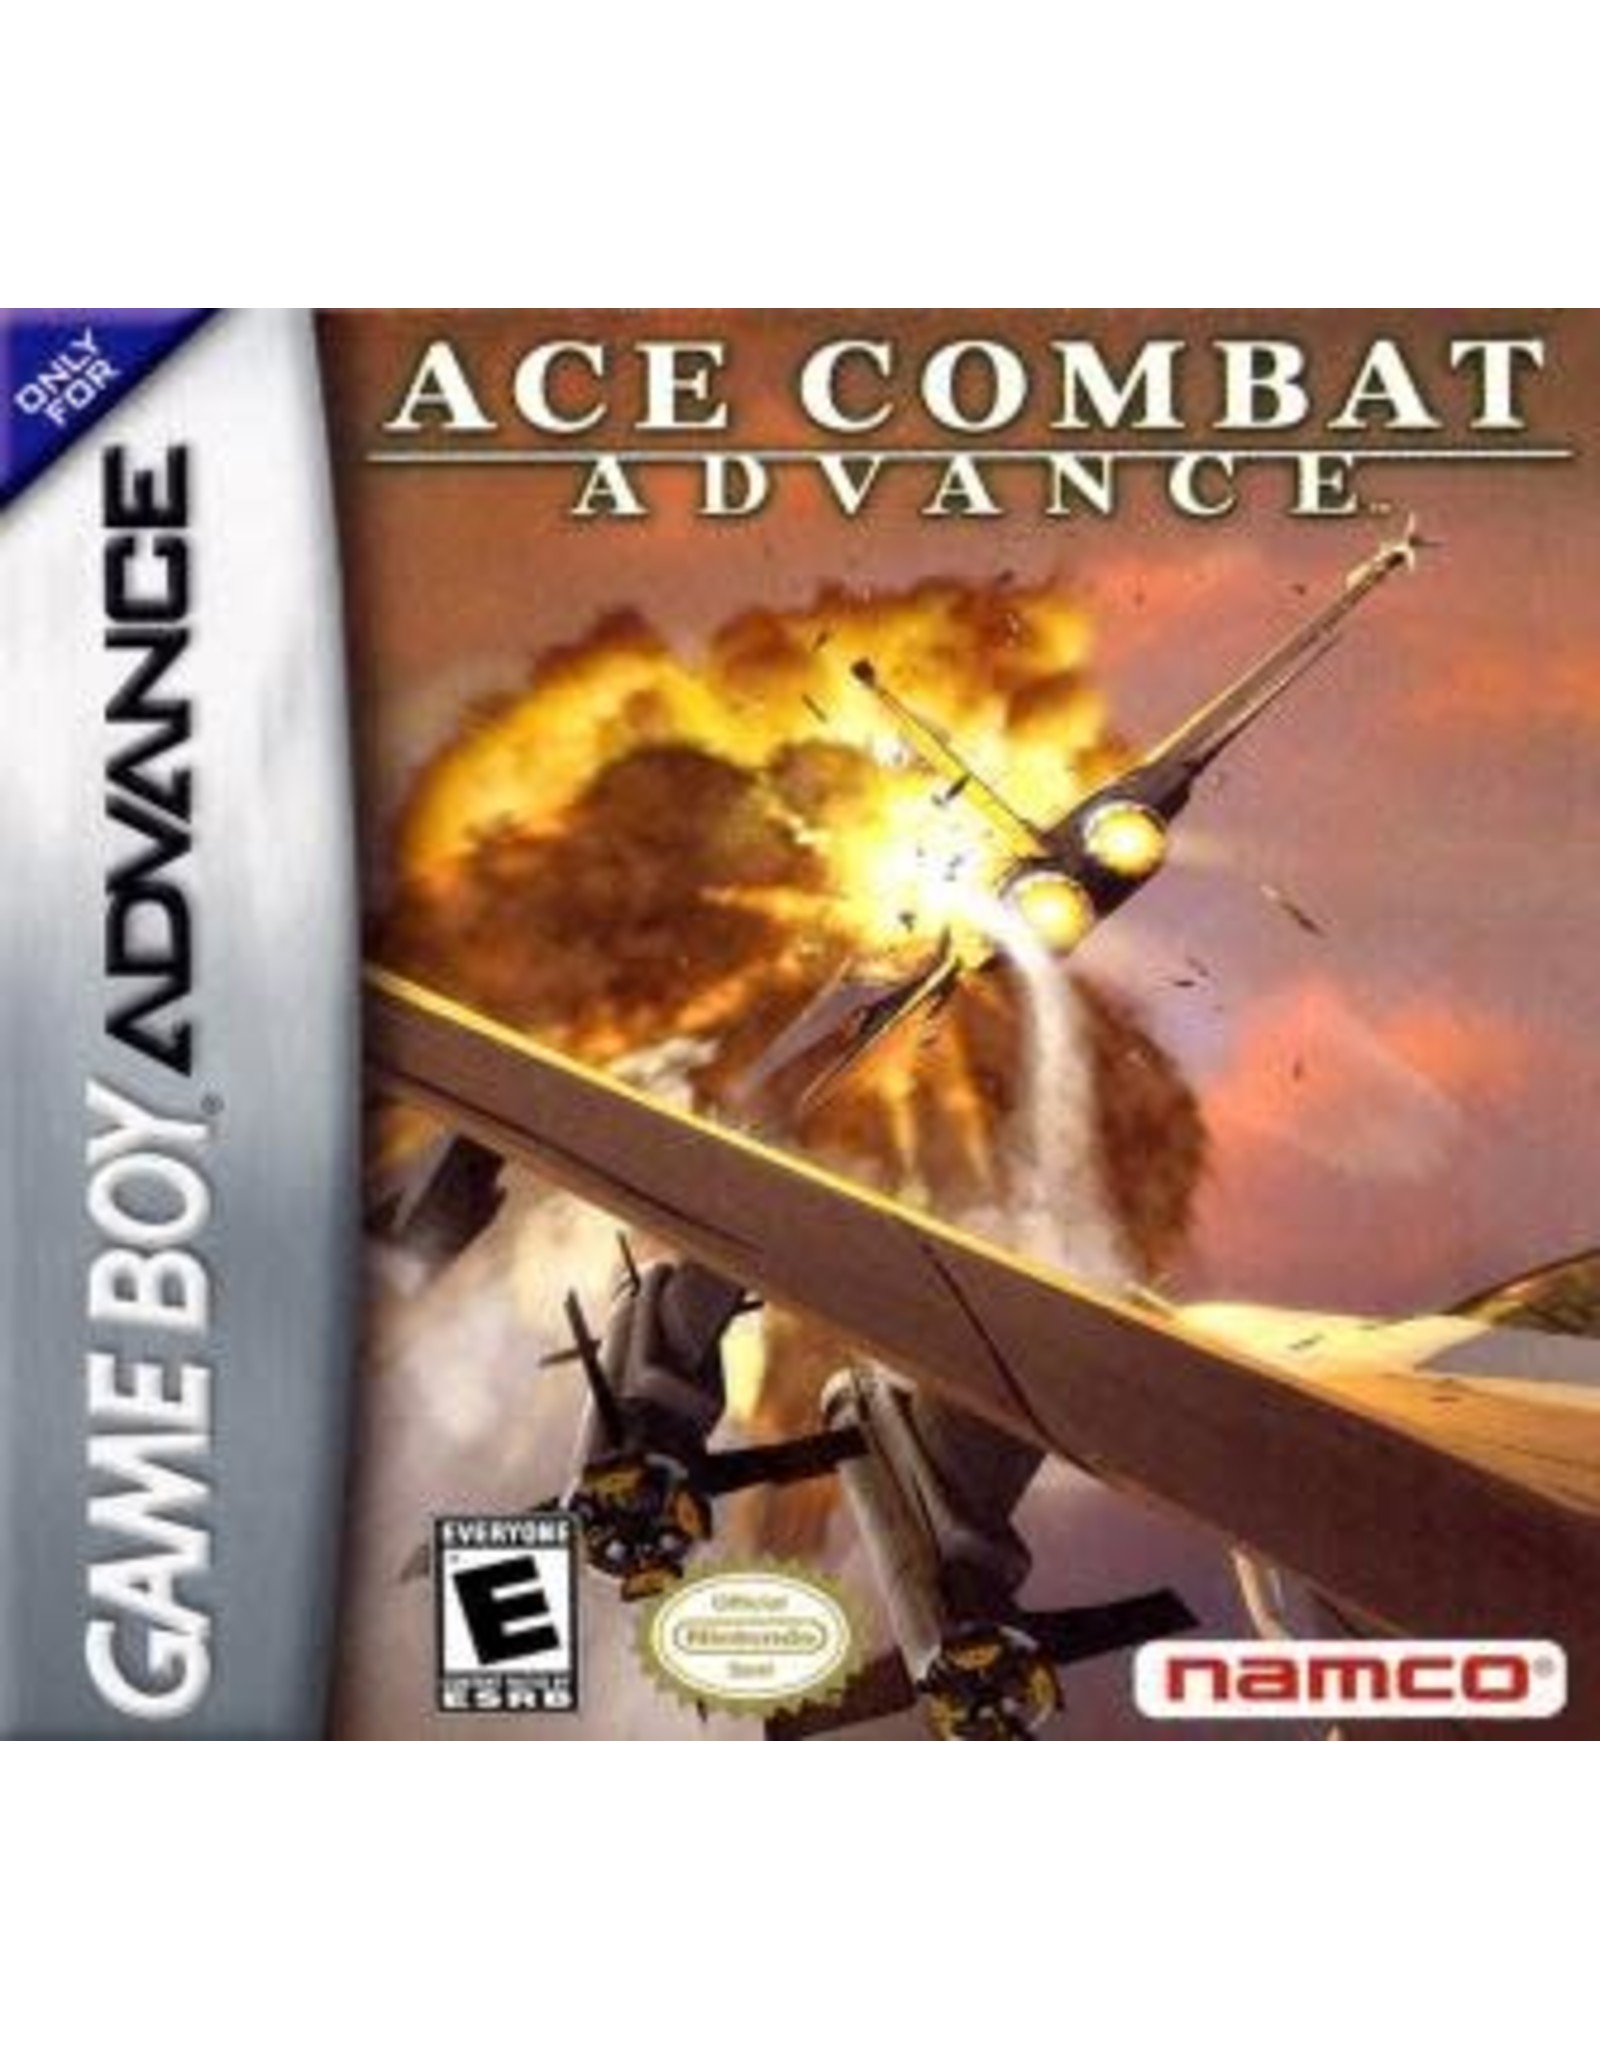 Game Boy Advance Ace Combat Advance (Cart Only)